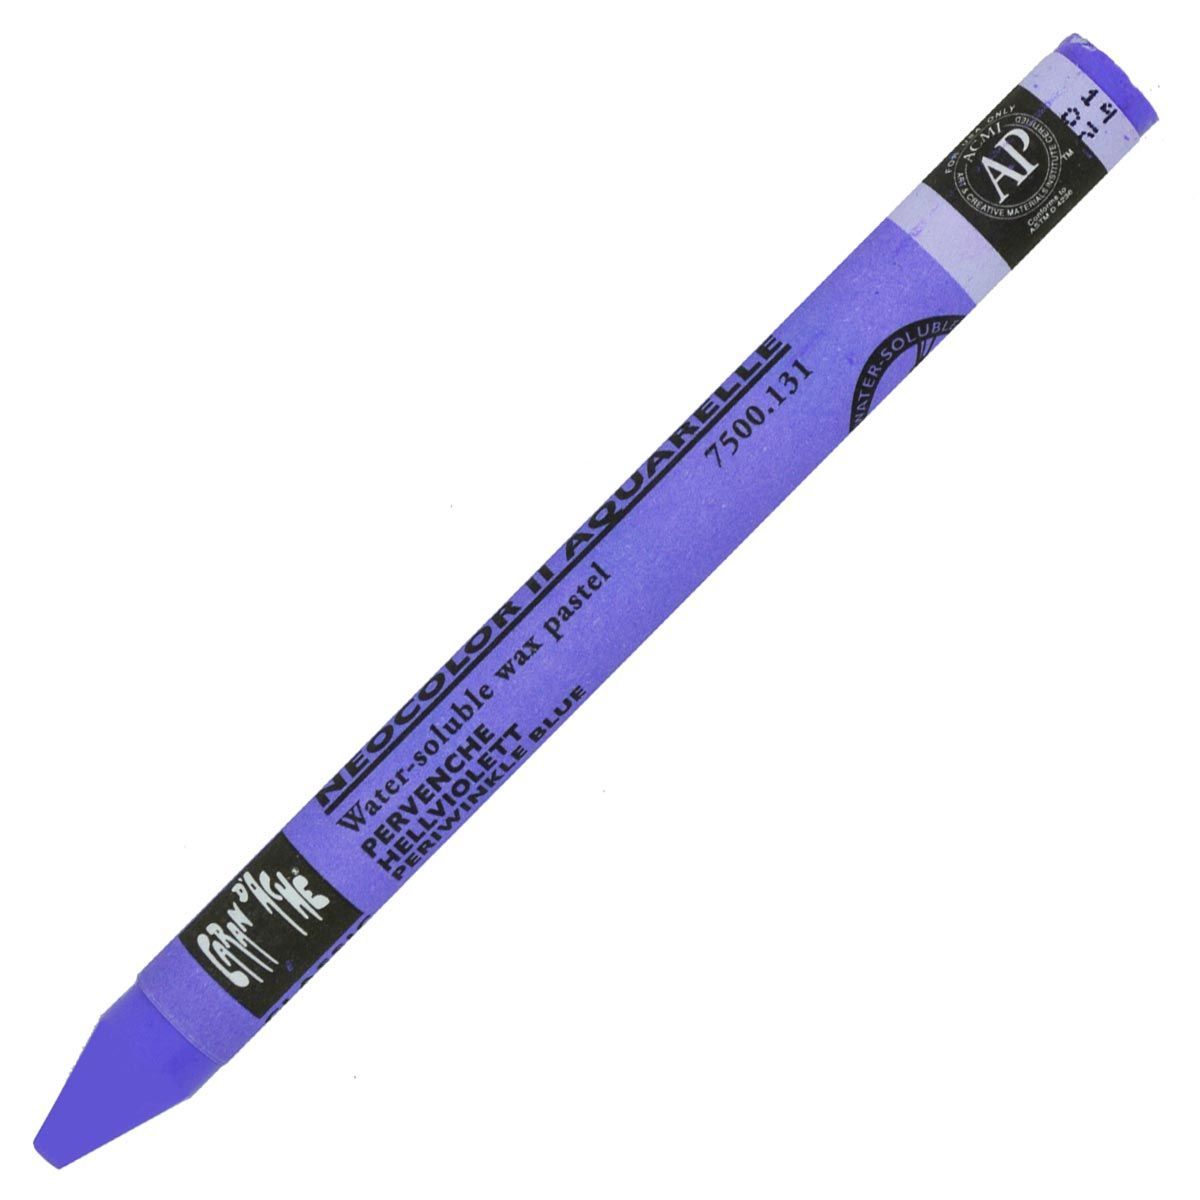 Neocolor II Aquarelle Artists’ Crayon - Periwinkle Blue 131